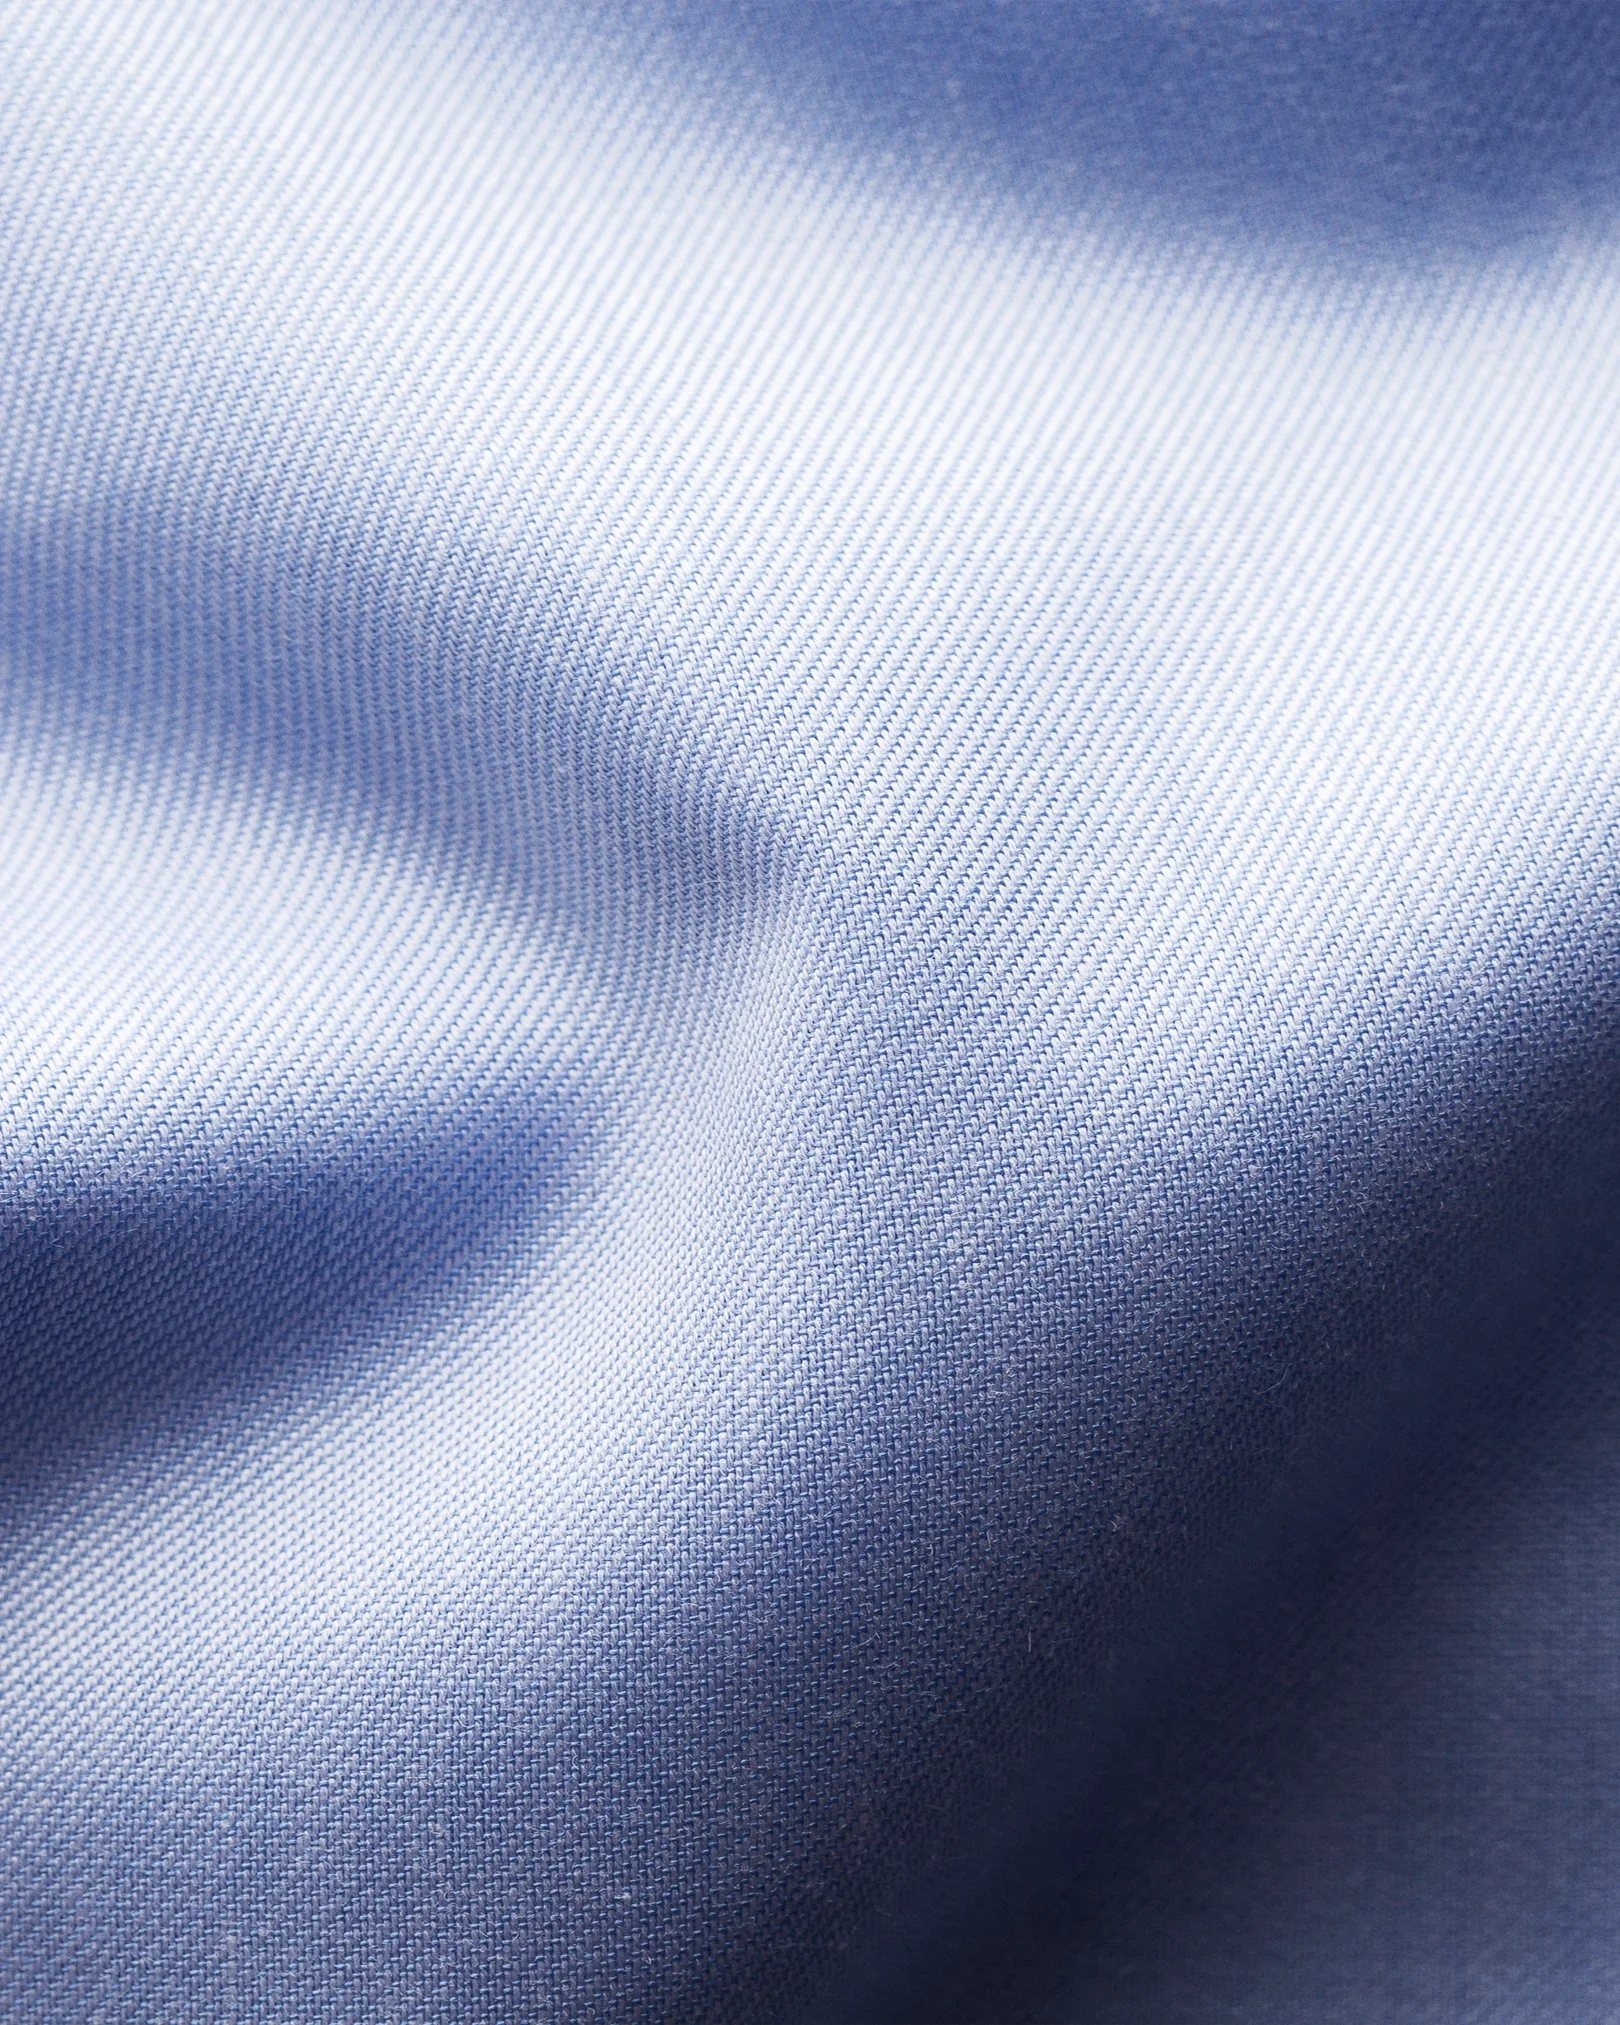 Eton - blue twill shirt with navy details